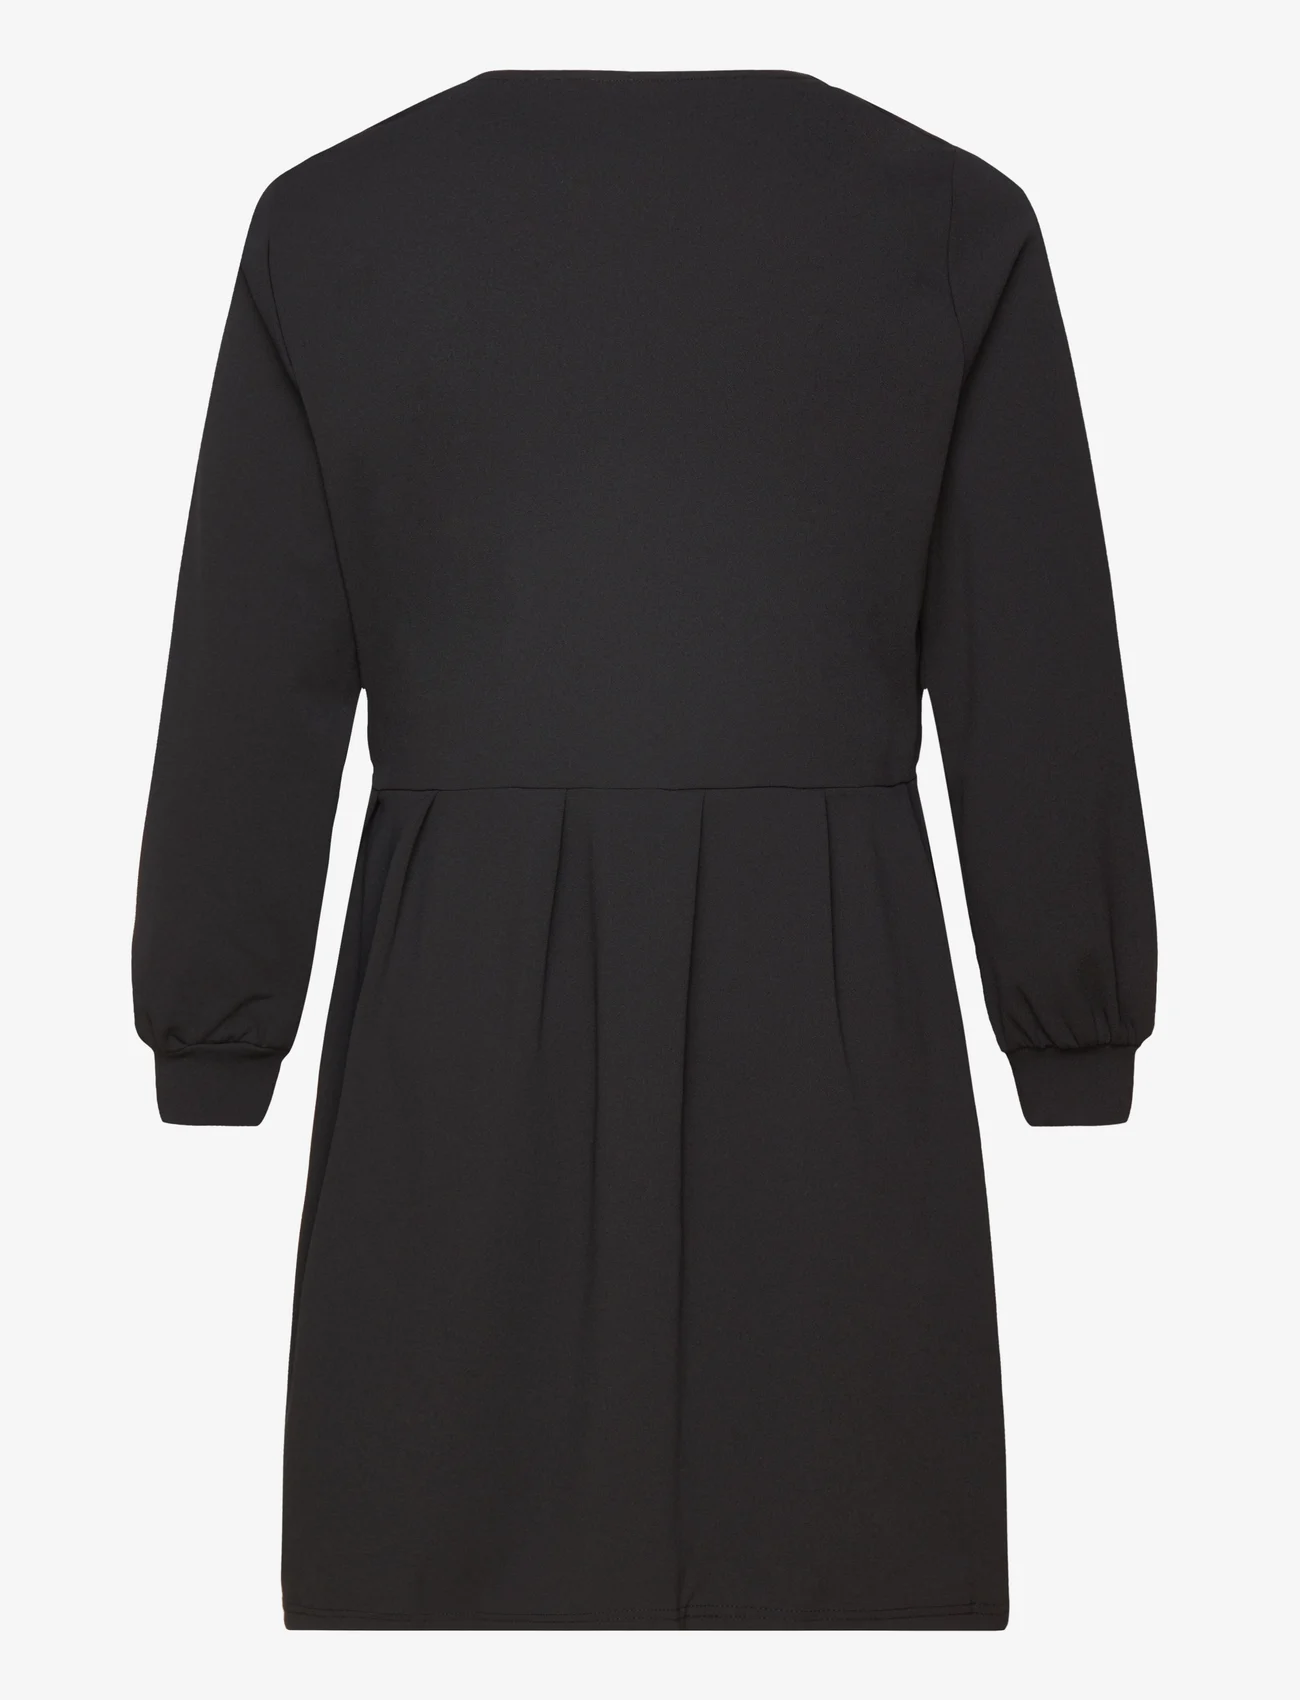 Zizzi - VLESLIE, L/S, ABK DRESS - korta klänningar - black - 1